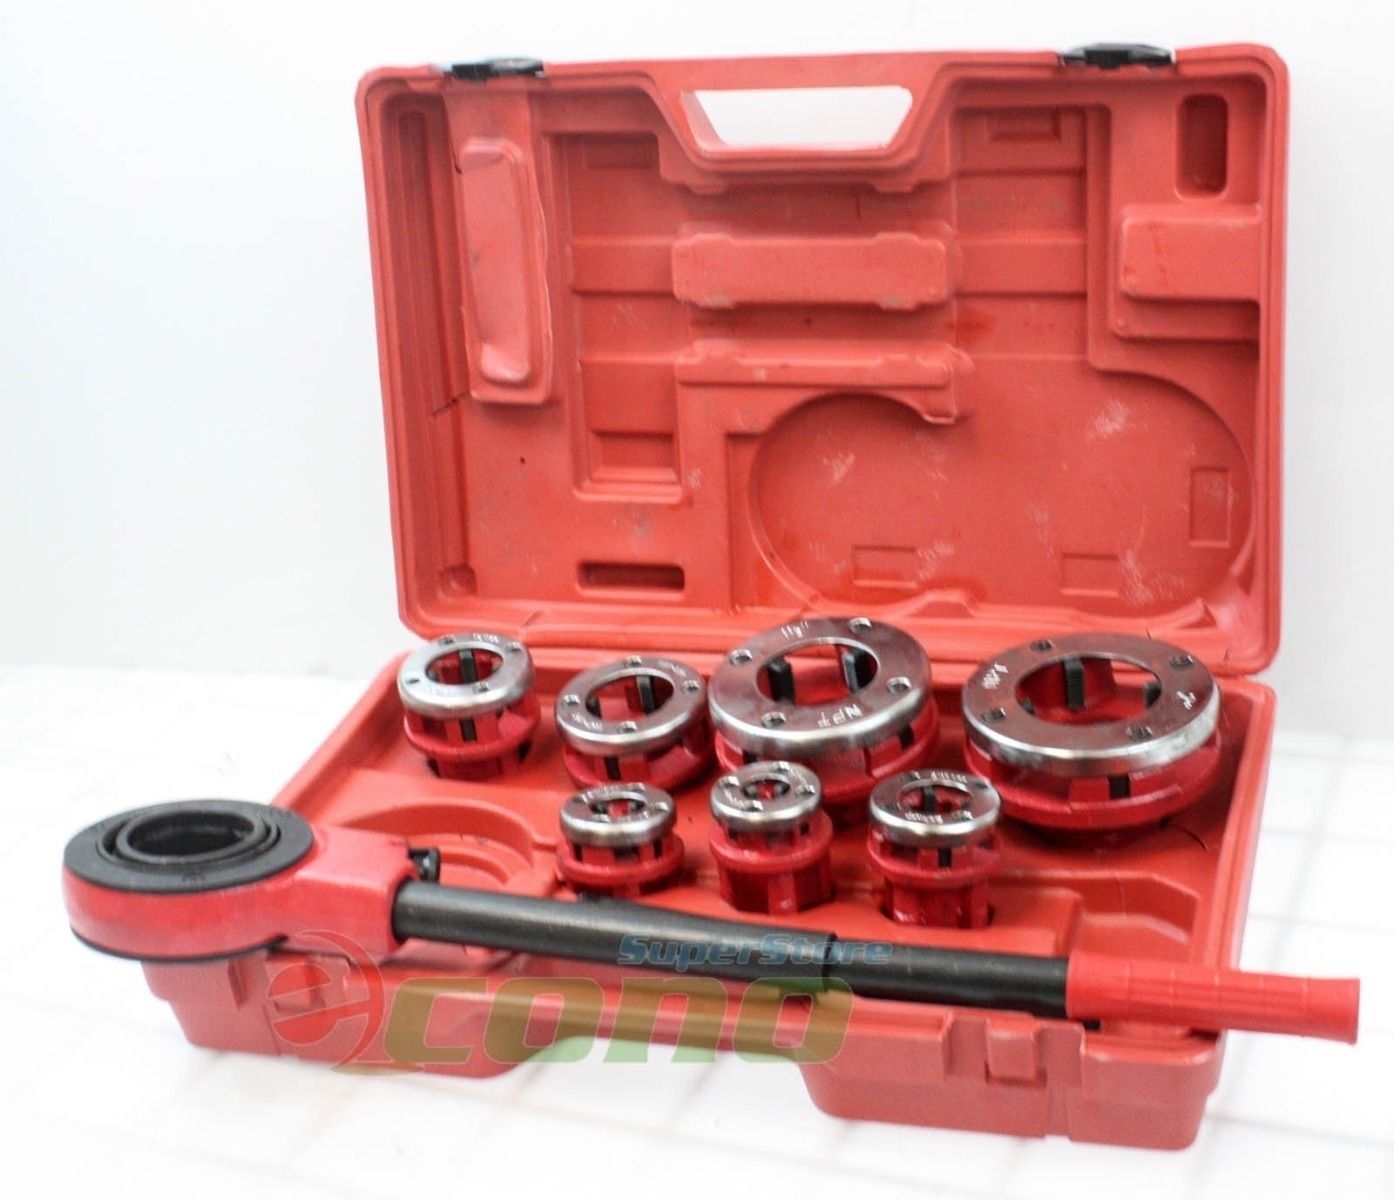 1" Pipe Threader Tool Kit Ratchet Handle R 3/4" Case 3 Dies Set- 1/2" HFS 